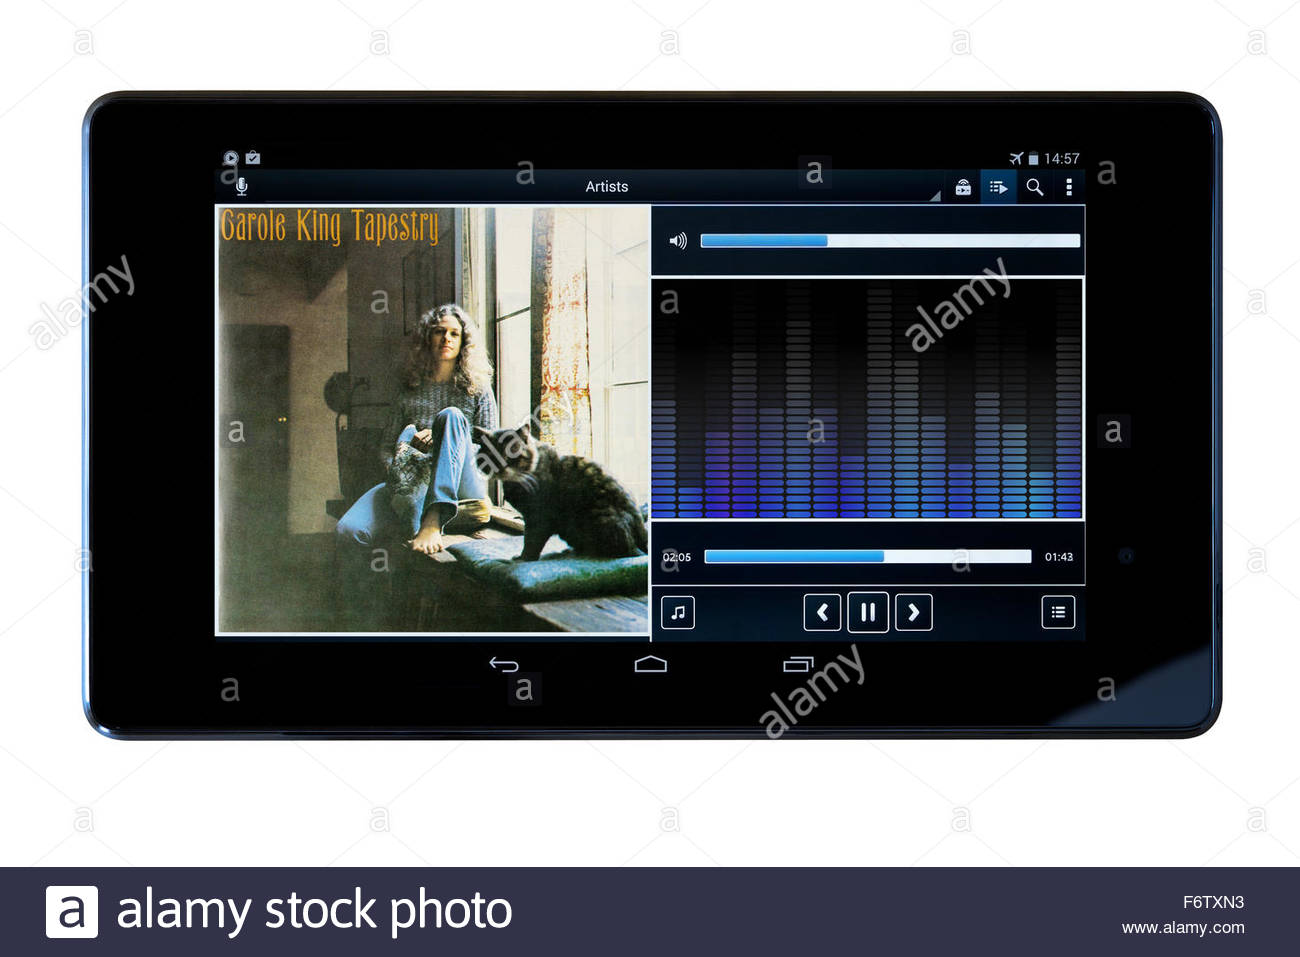 Carole King 1971 2nd album Tapestry, MP3 album art on PC tablet, England  Stock Photo - Alamy